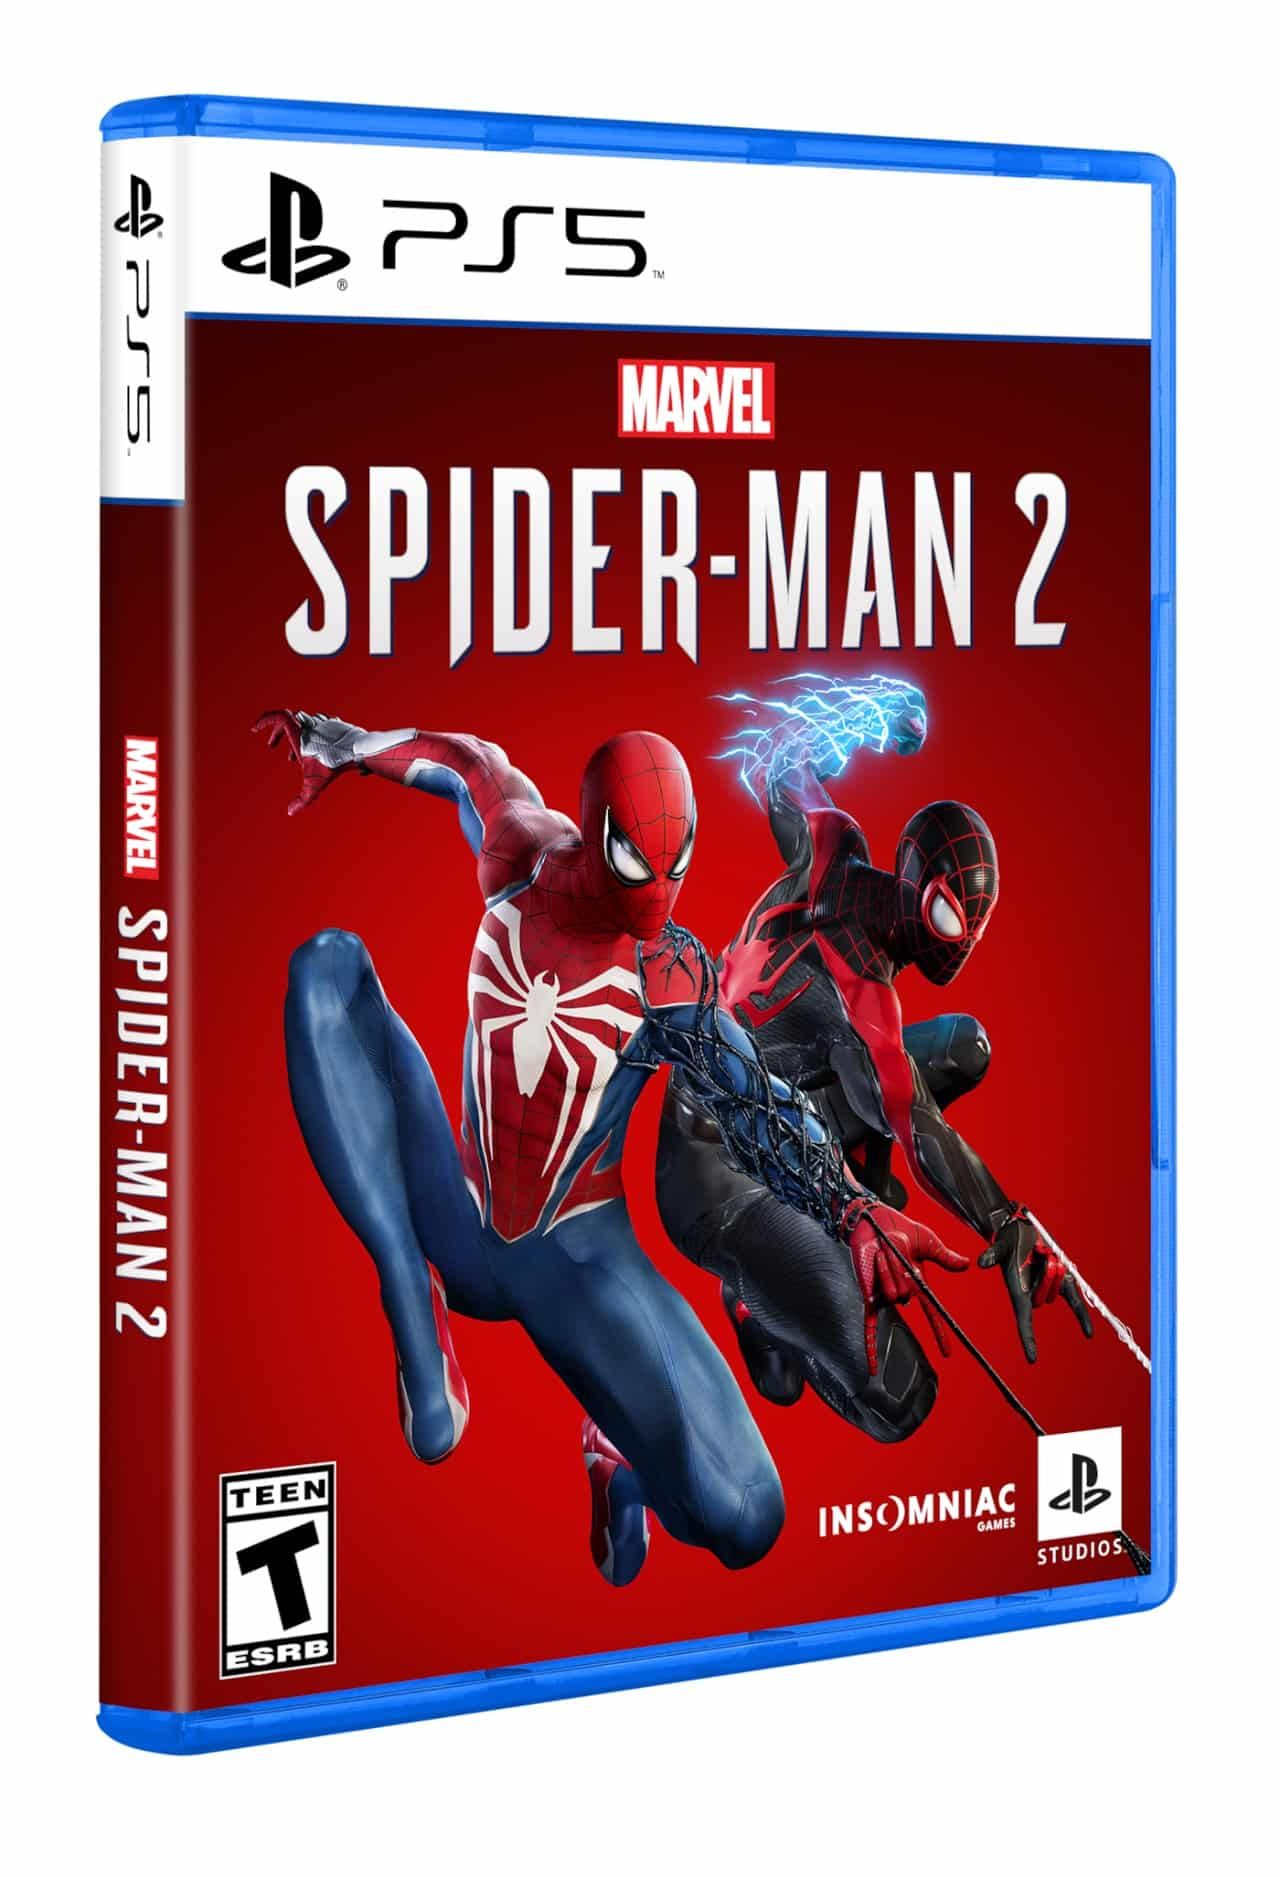 Spider-Man 2 Digital Deluxe Edition